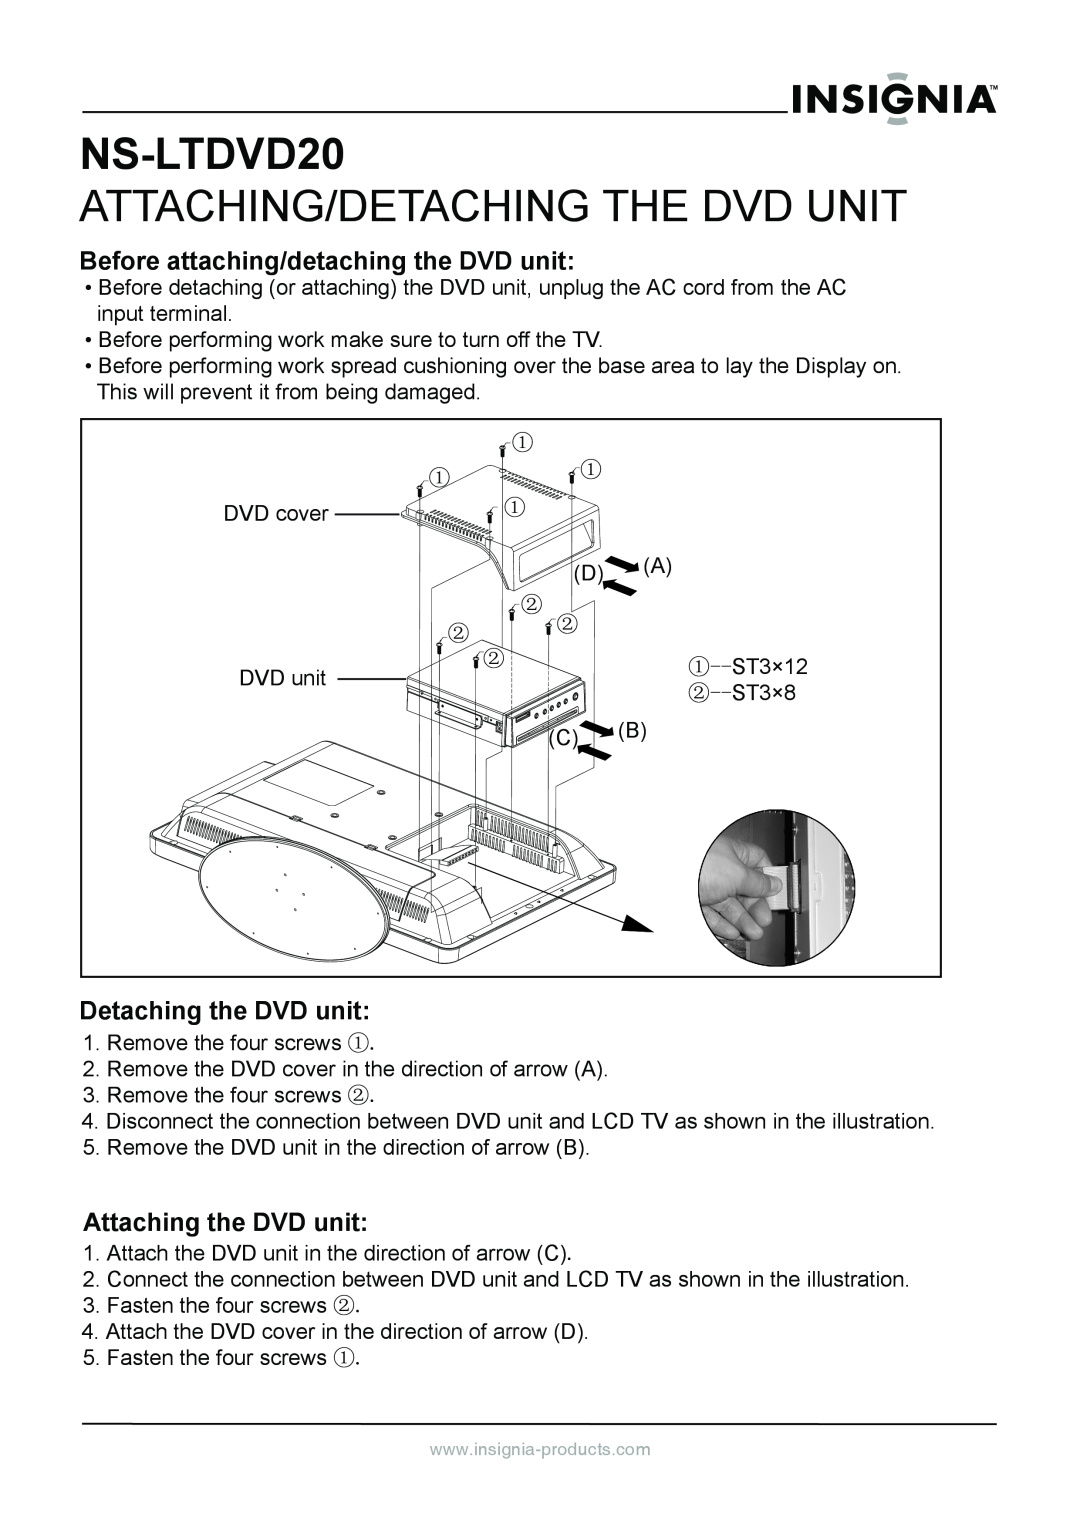 Insignia NS-LTDVD20 manual Attaching/Detaching The Dvd Unit, Before attaching/detaching the DVD unit 